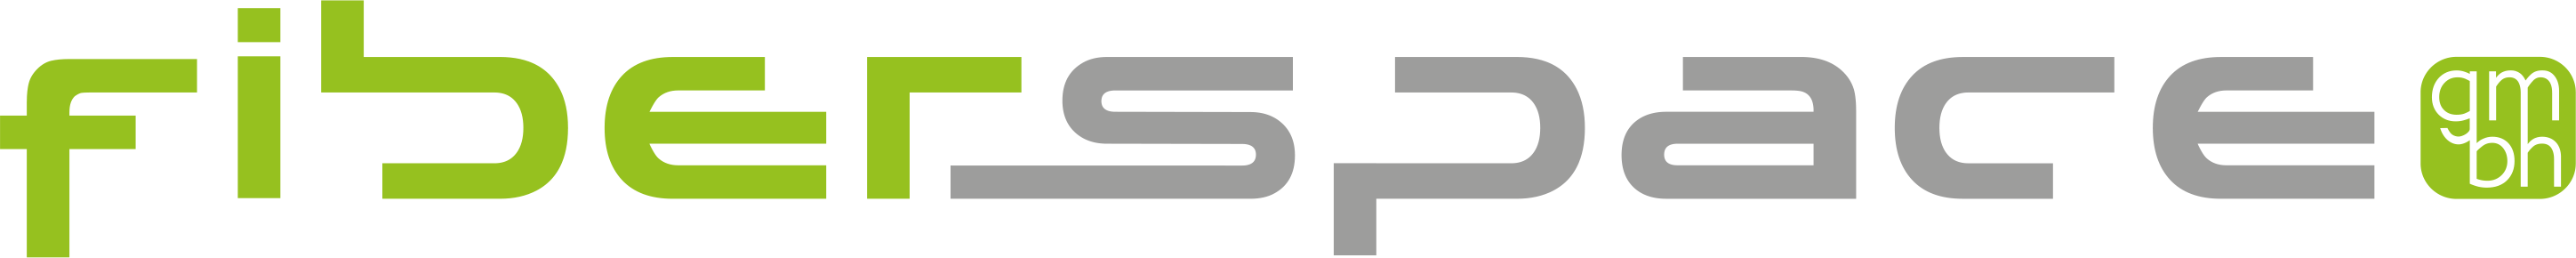 Logo fiberspace gmbh